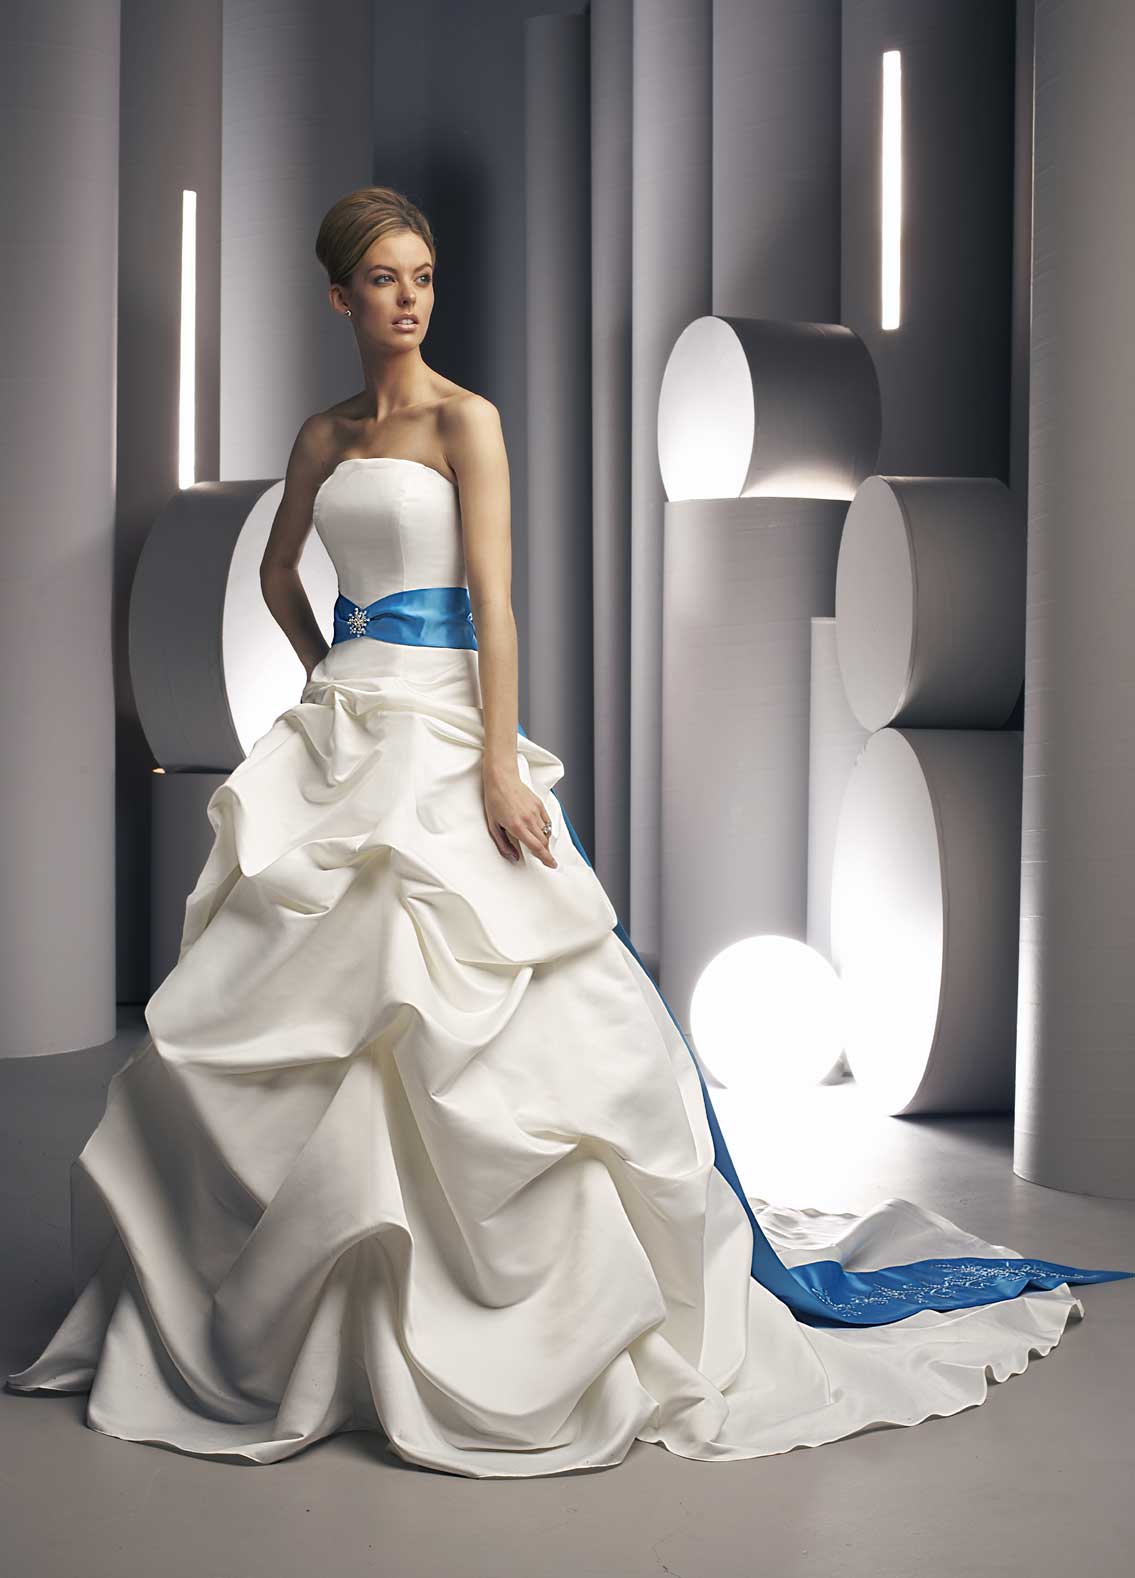 White Wedding Gown with blue sash.